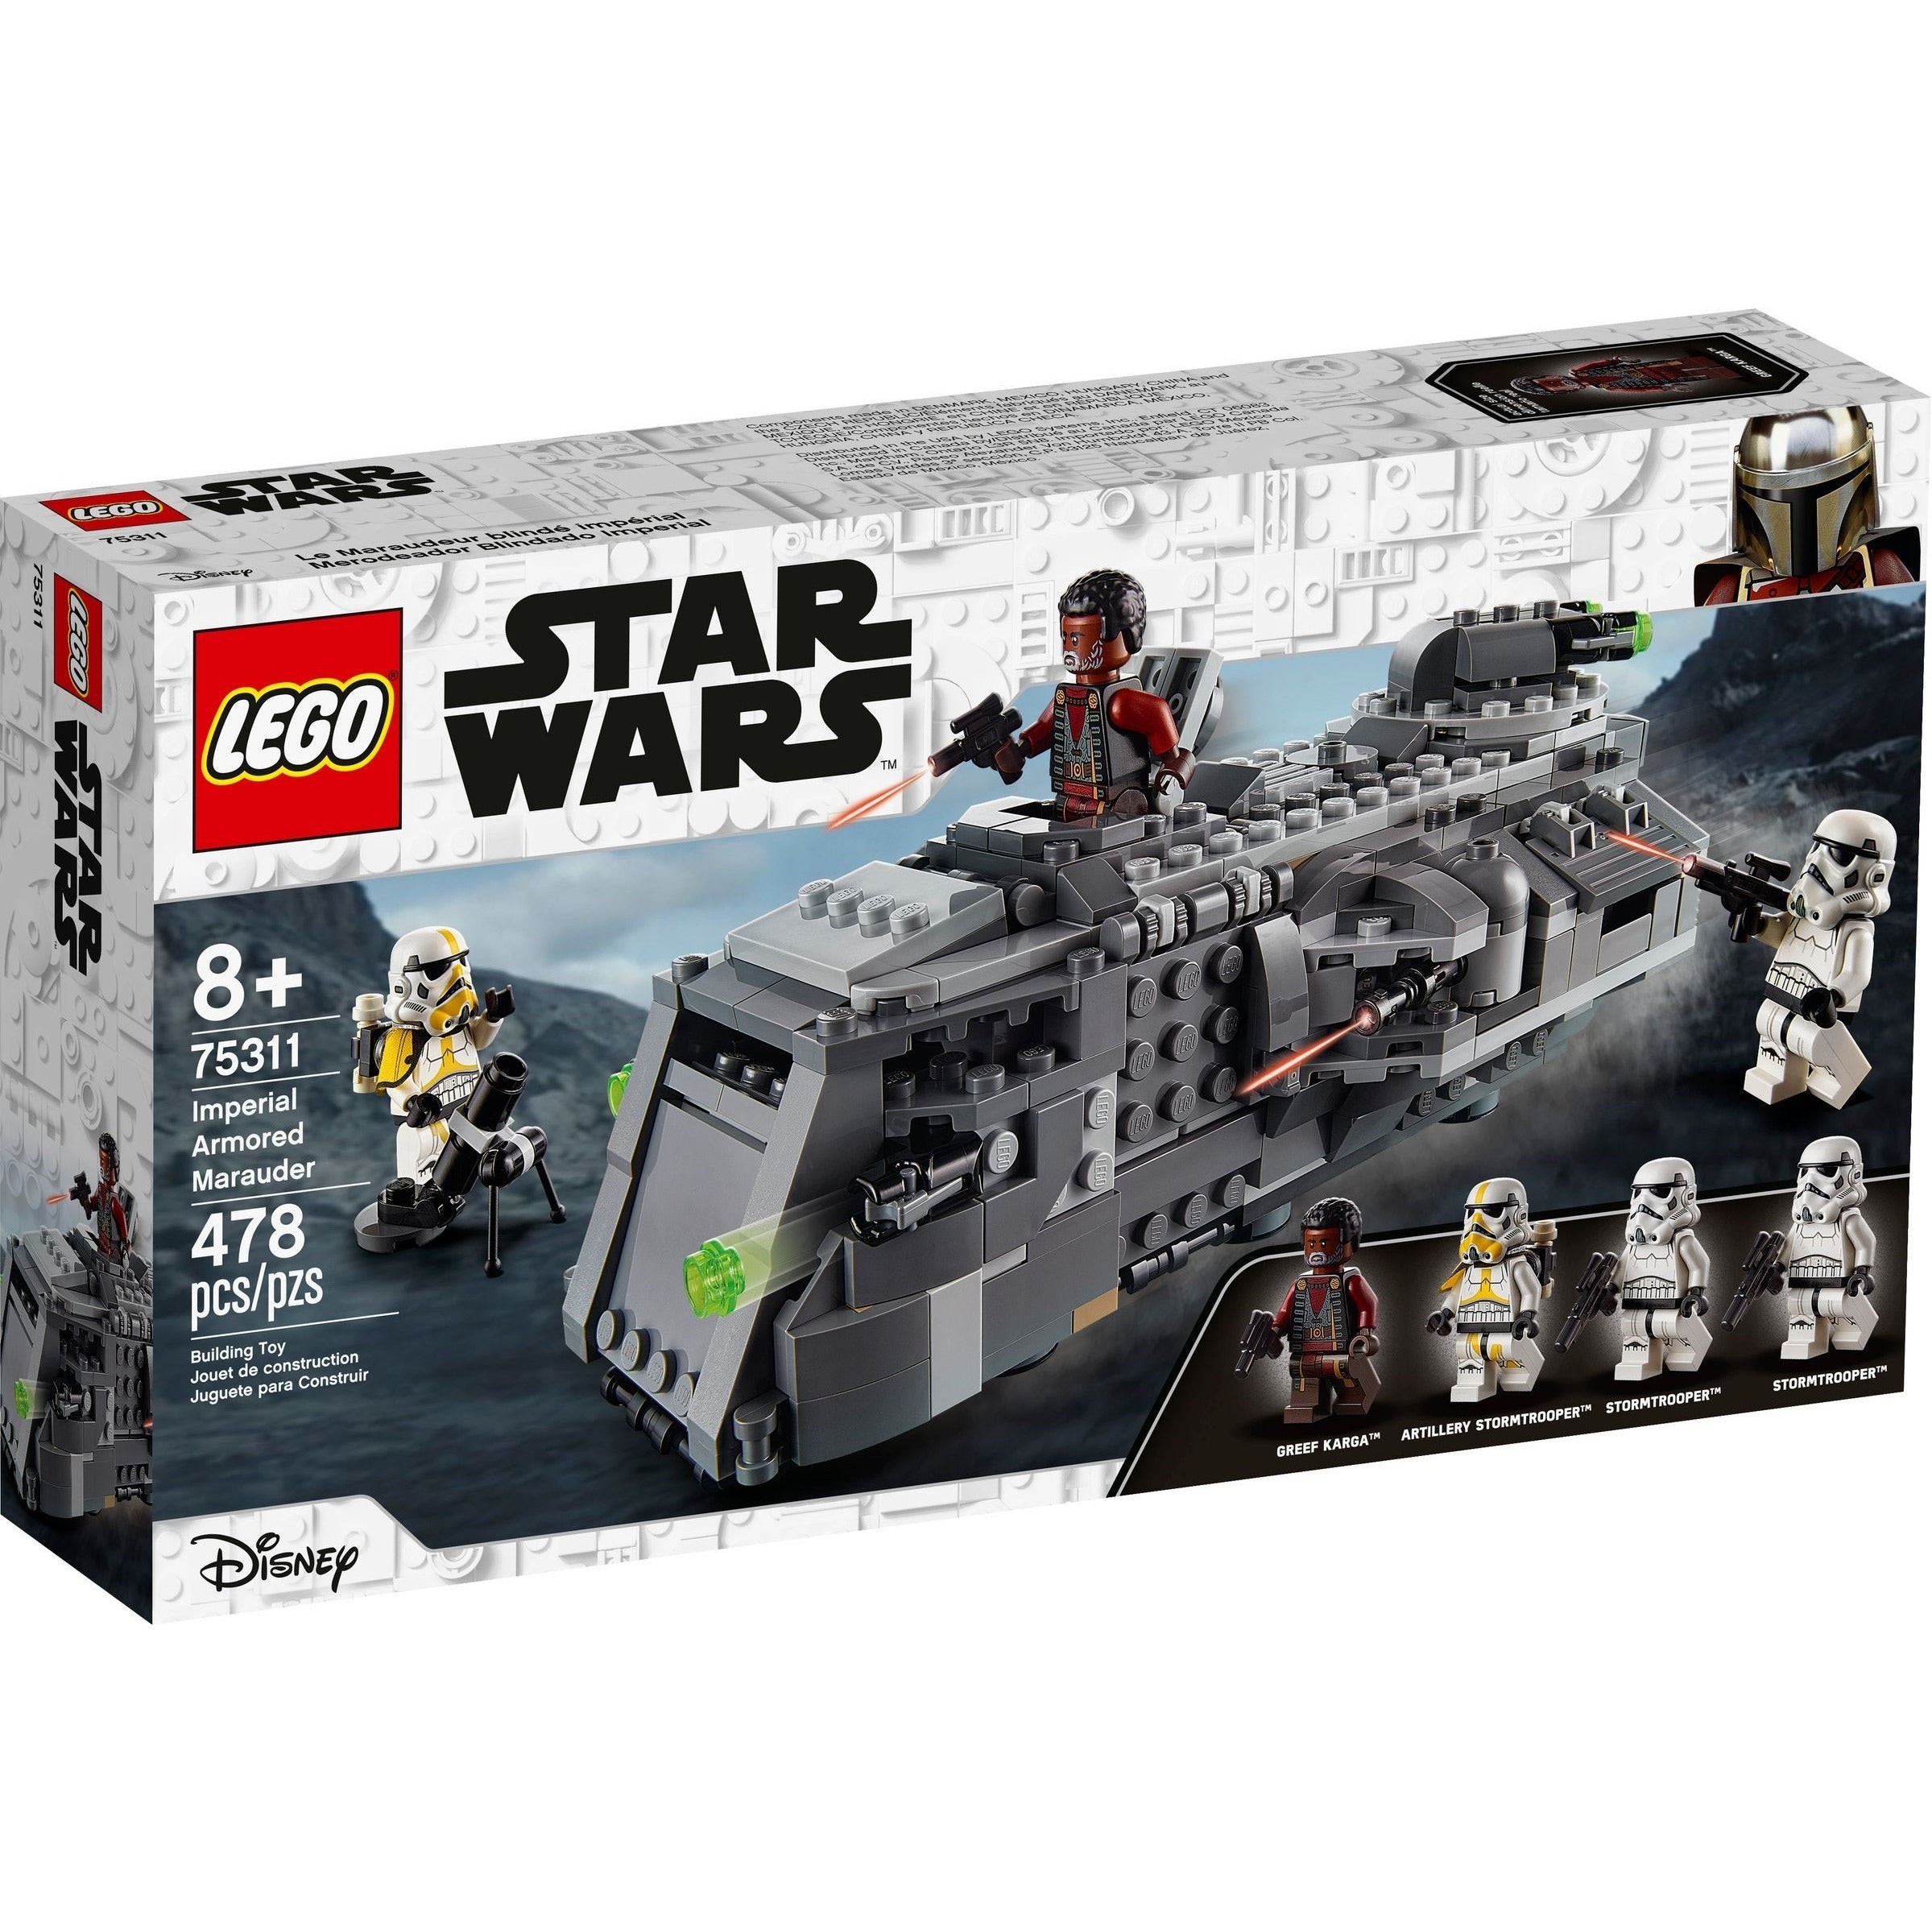 Series: Lego Star Wars: Imperial Armored Marauder 75311